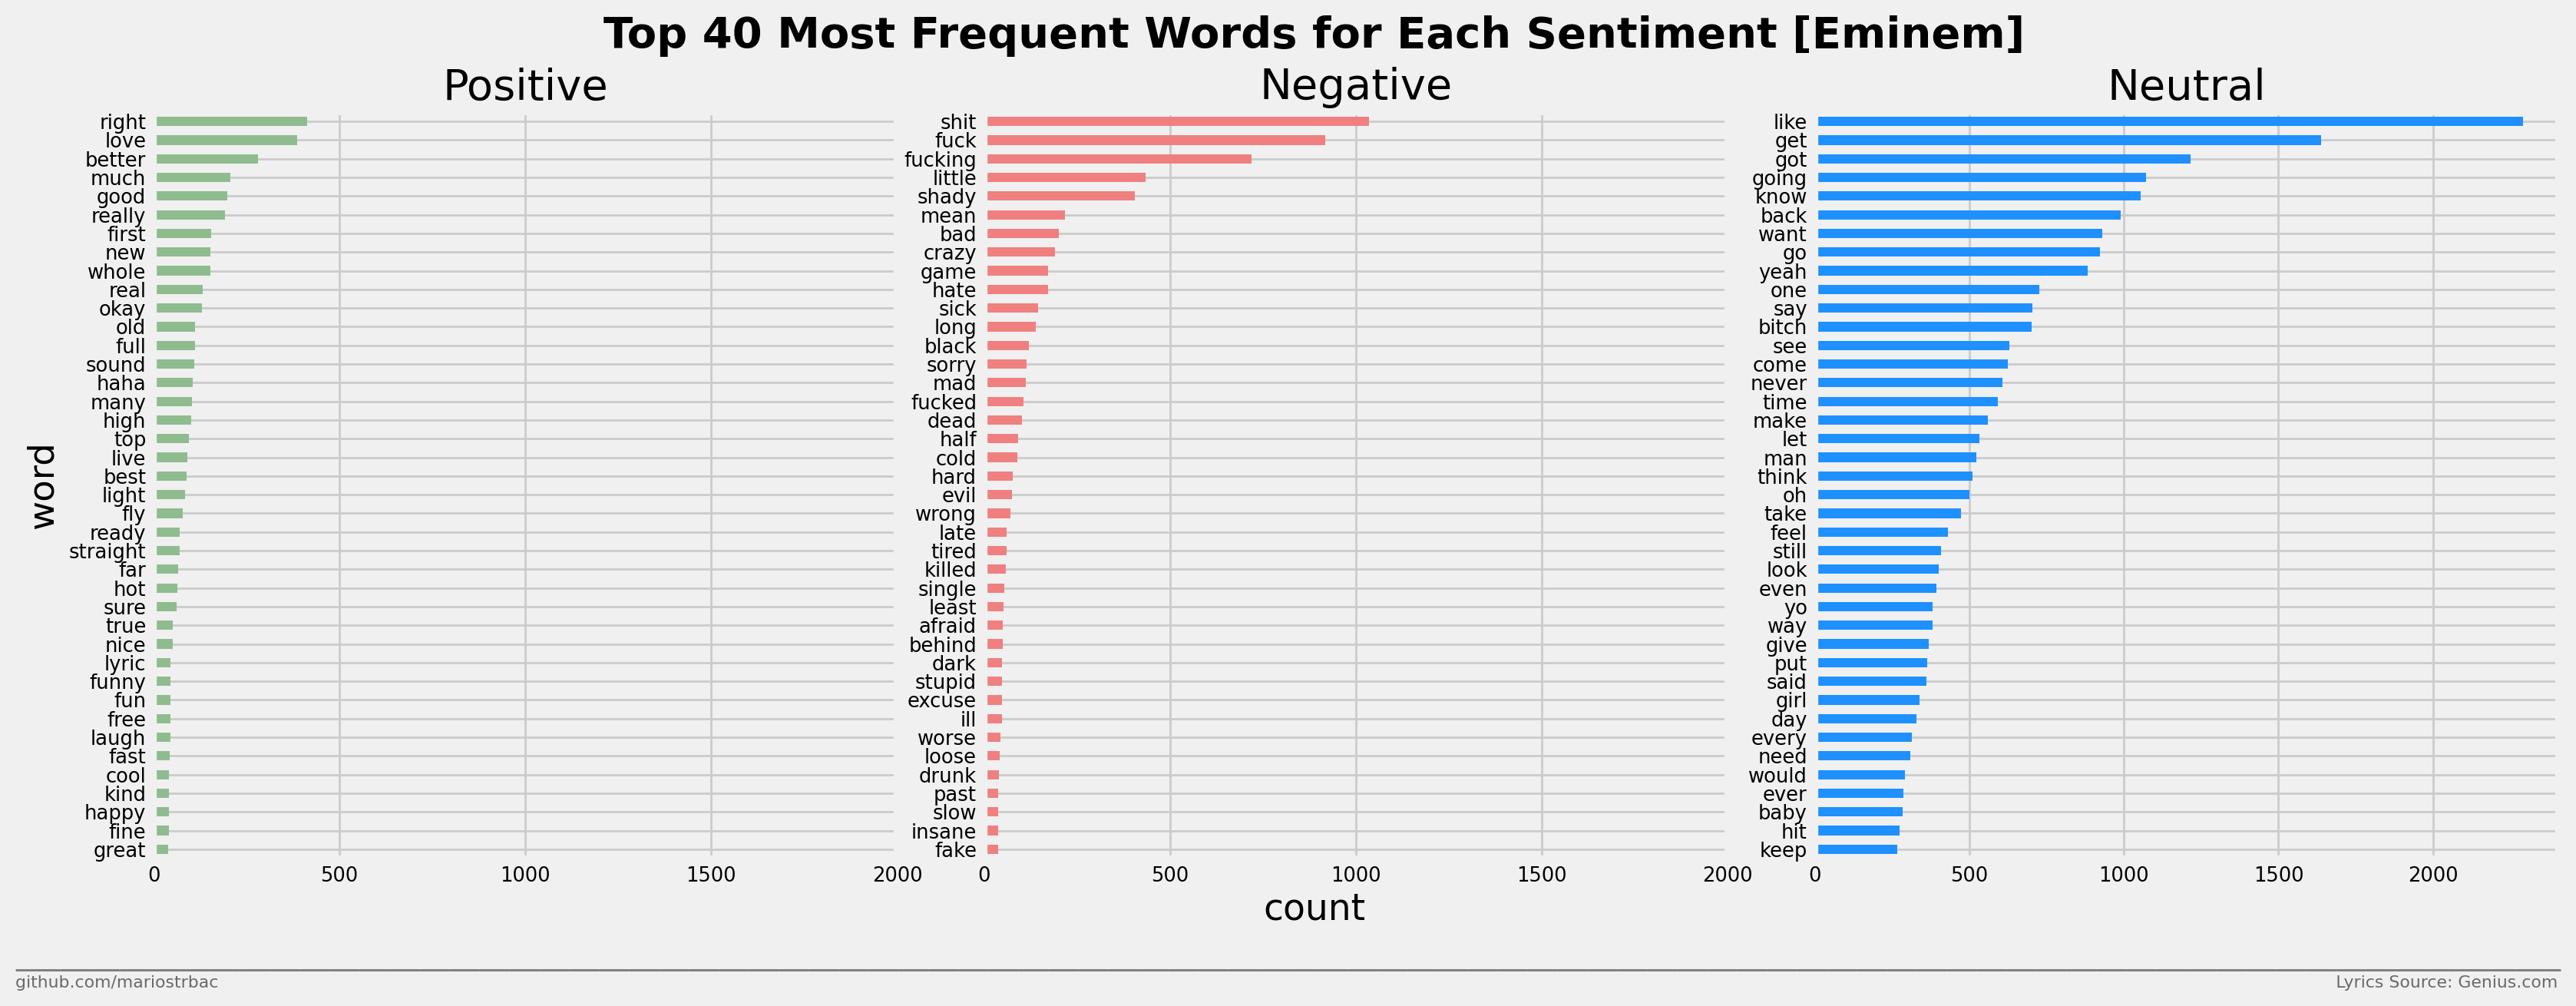 40_most_frequent_words_sentiment_eminem.png